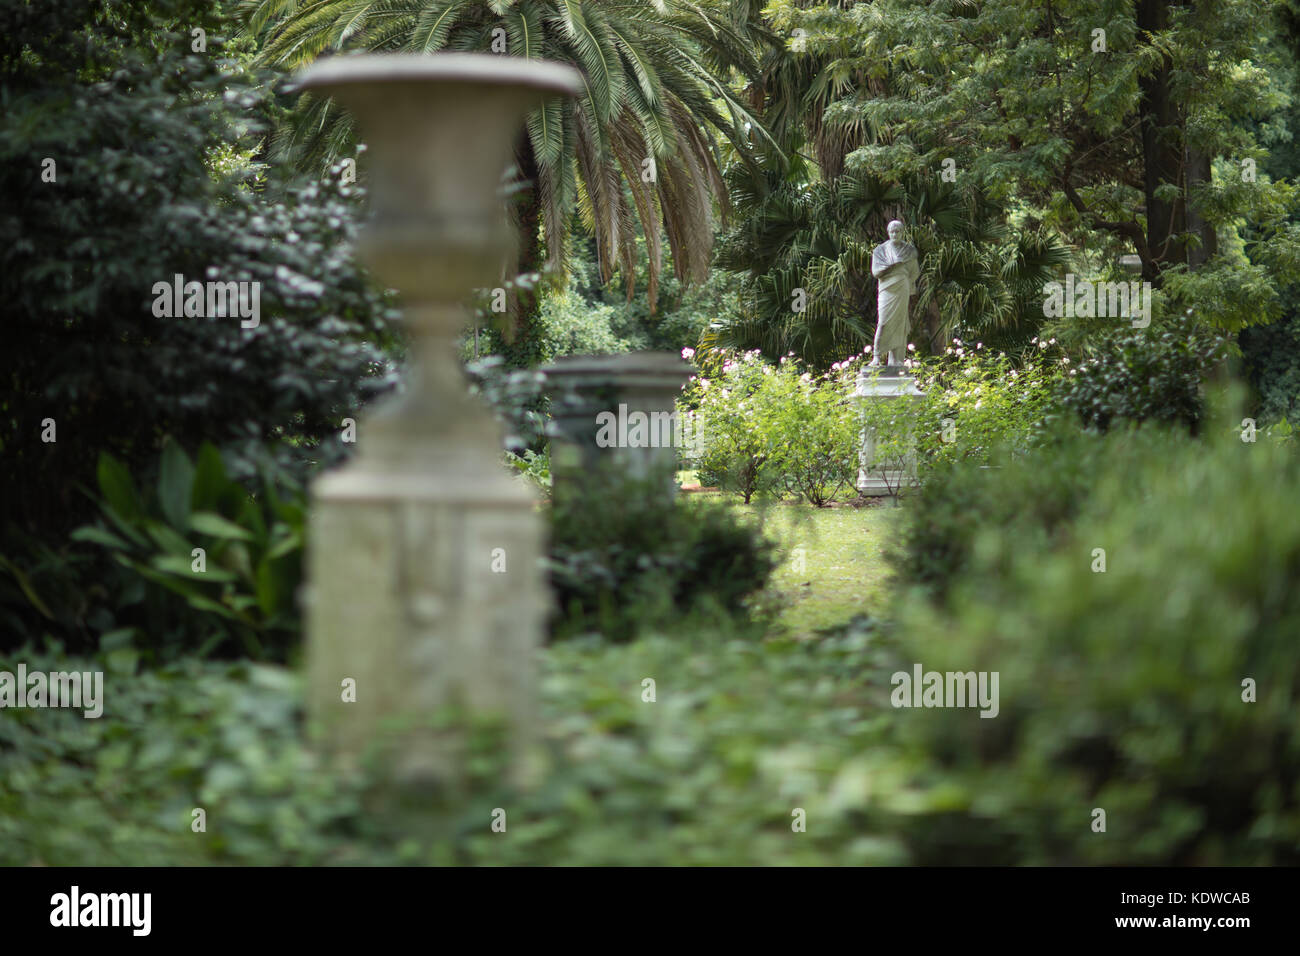 Jardin Botanico Carlos Thays, Palermo, Buenos Aires, Argentina Stock Photo